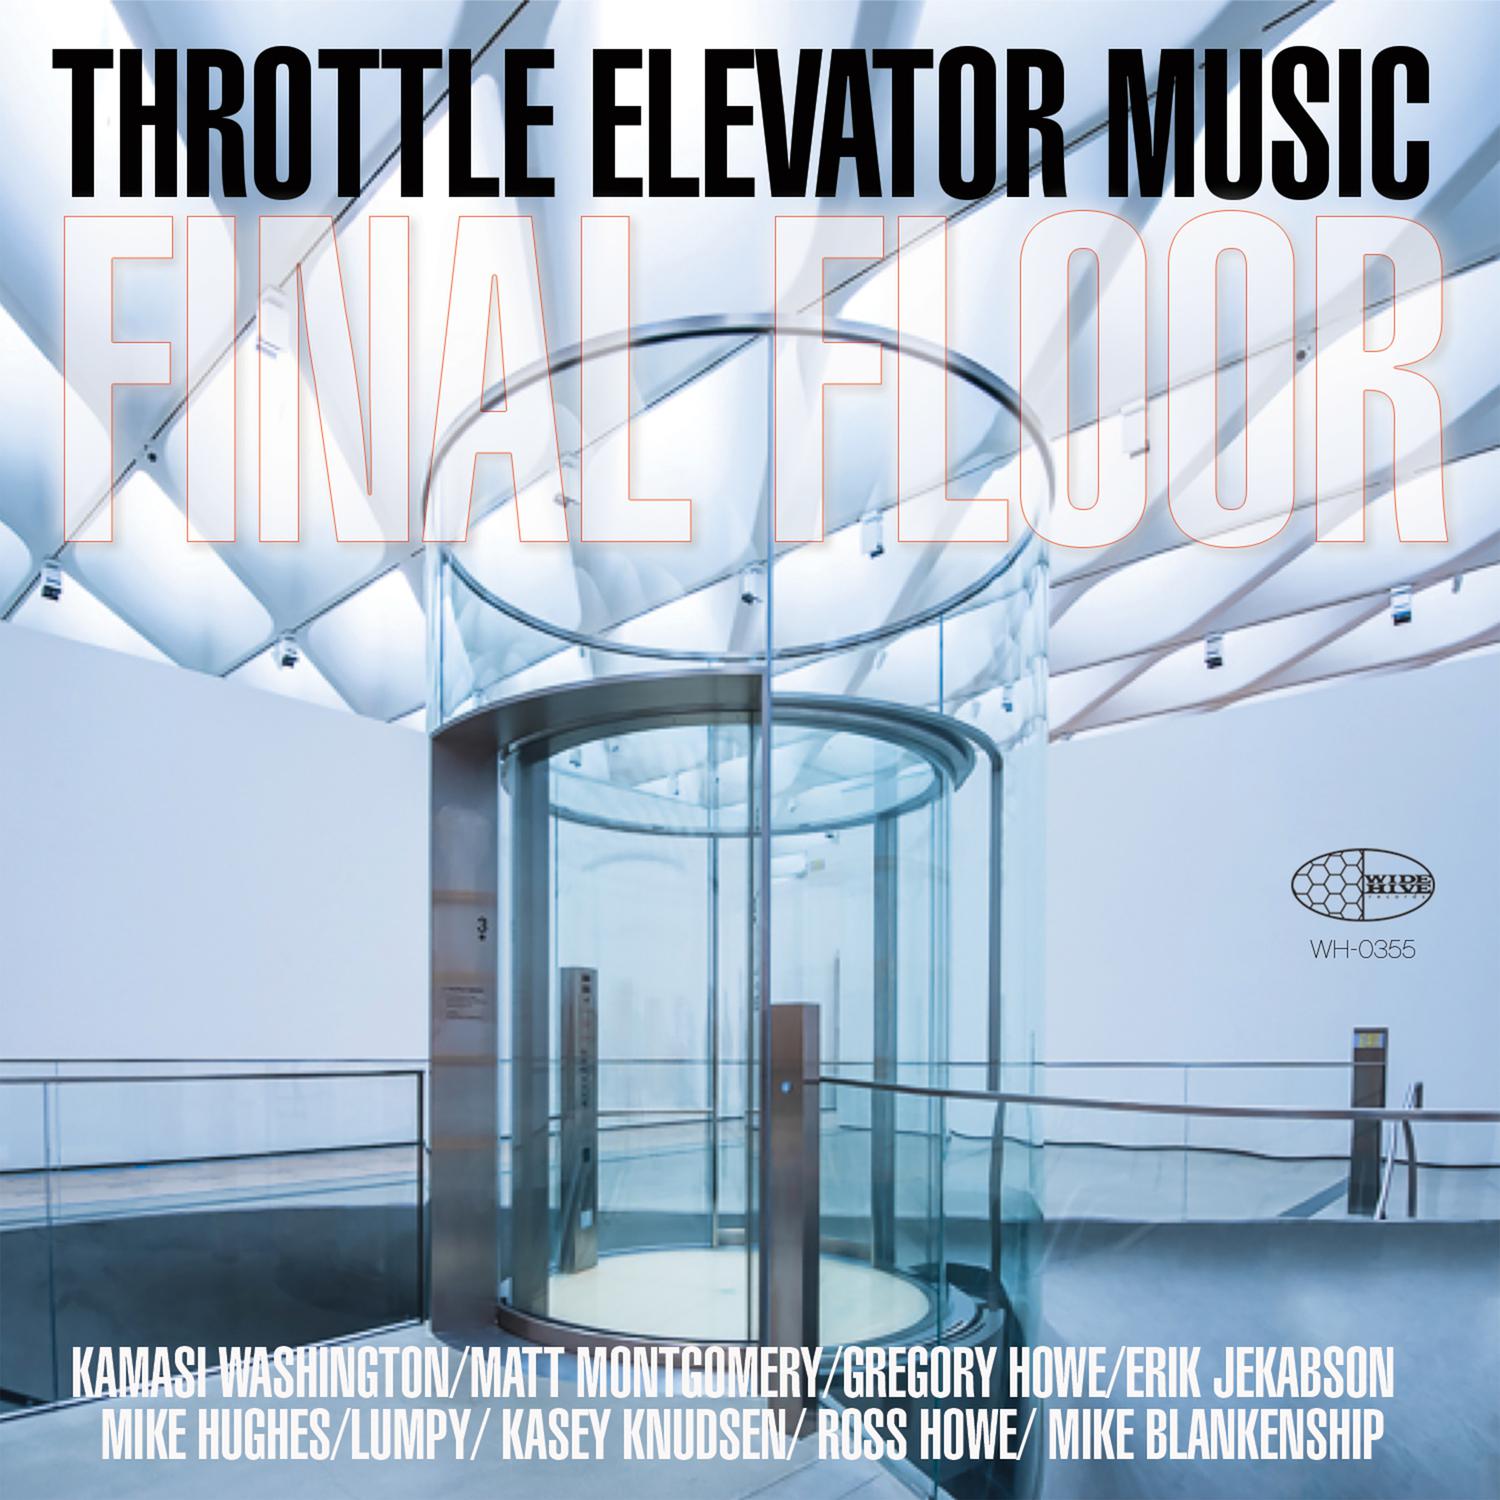 Throttle Elevator Music - Fast Remorse